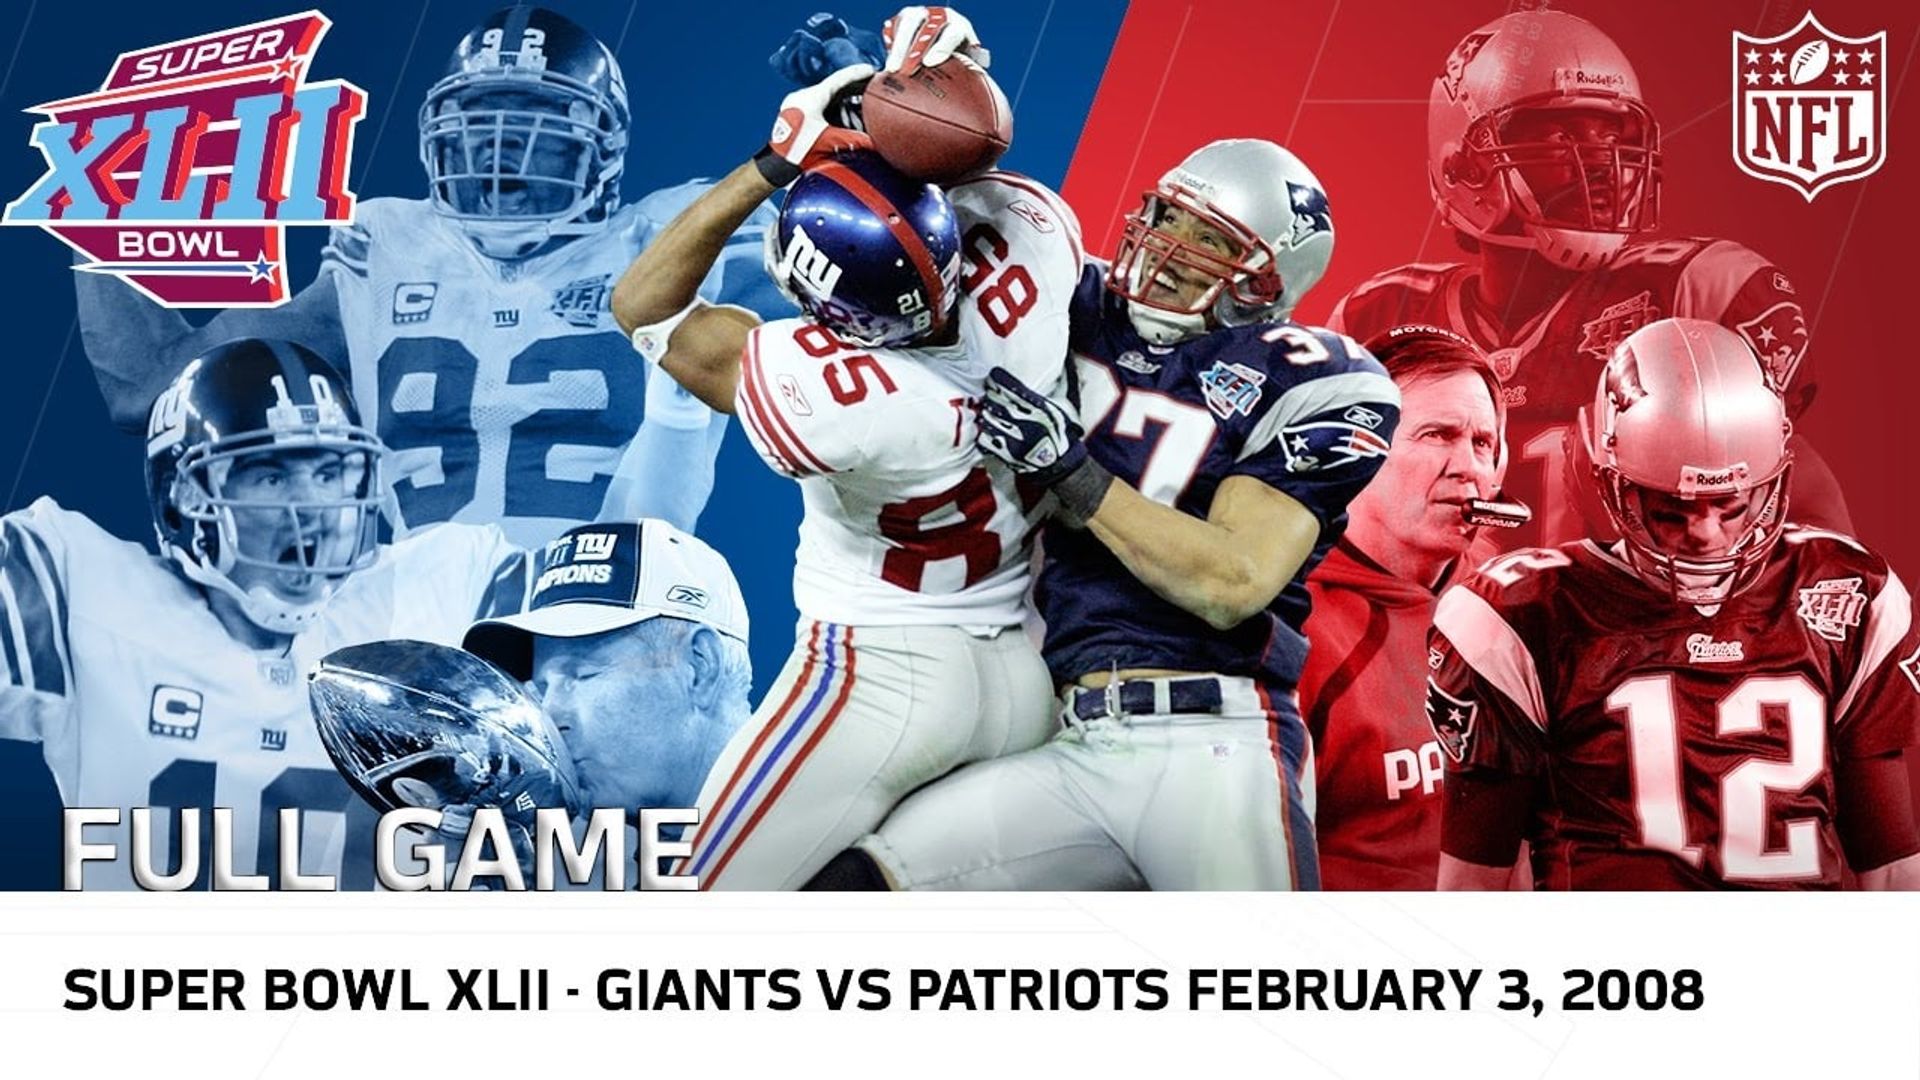 Super Bowl XLII background